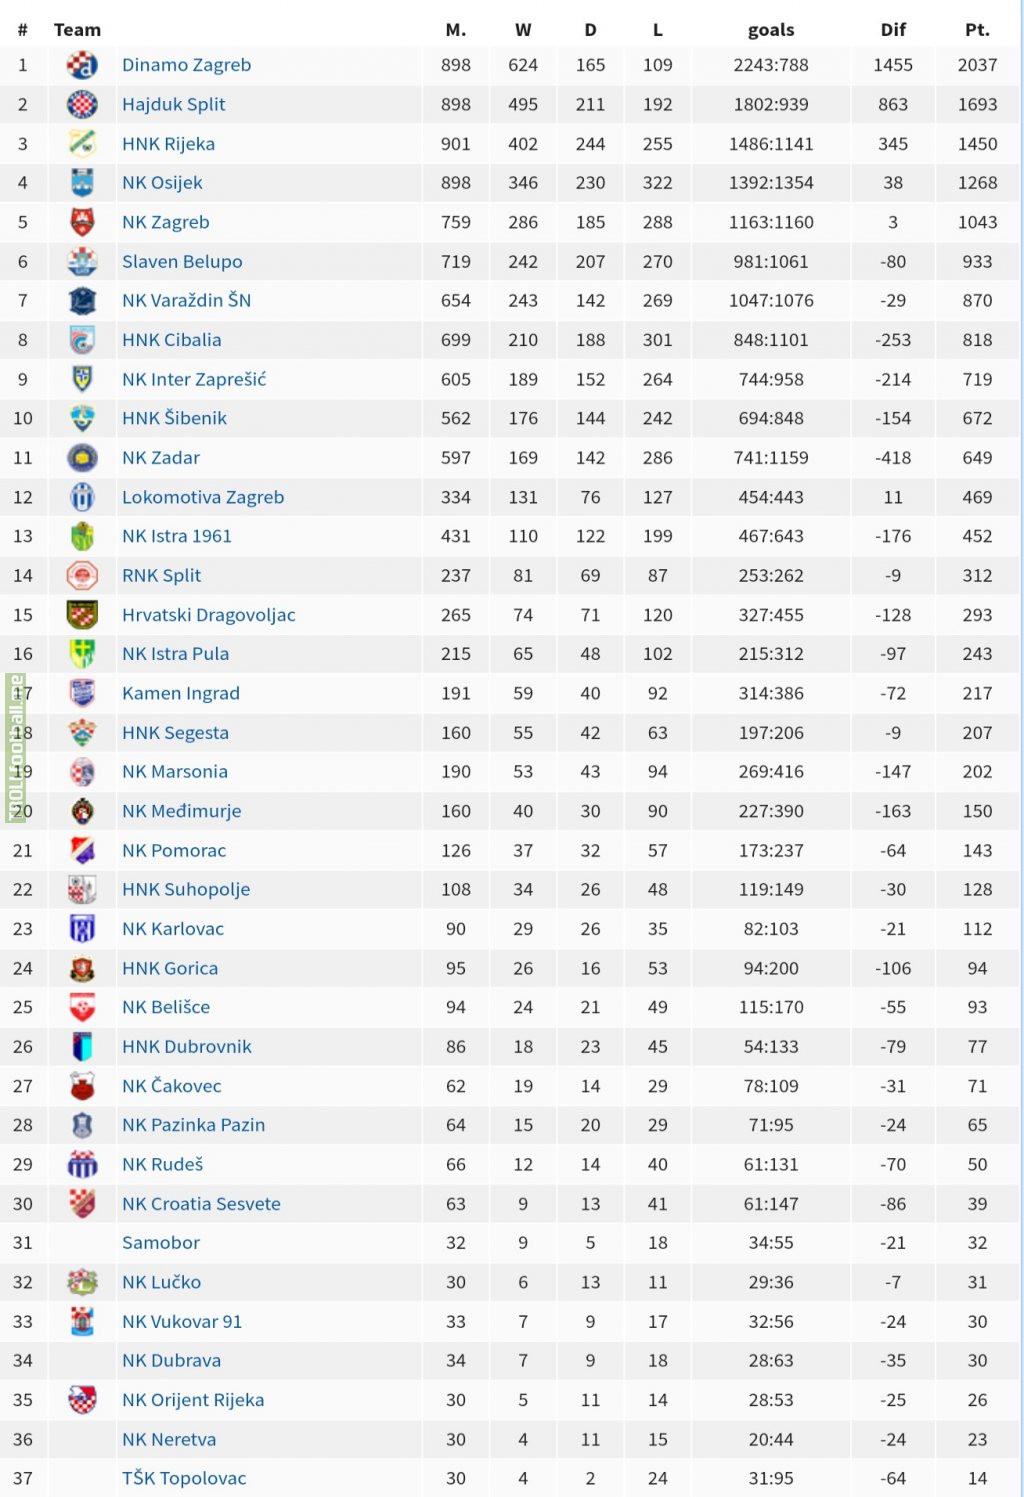 All-time 1.HNL league table [Croatia]